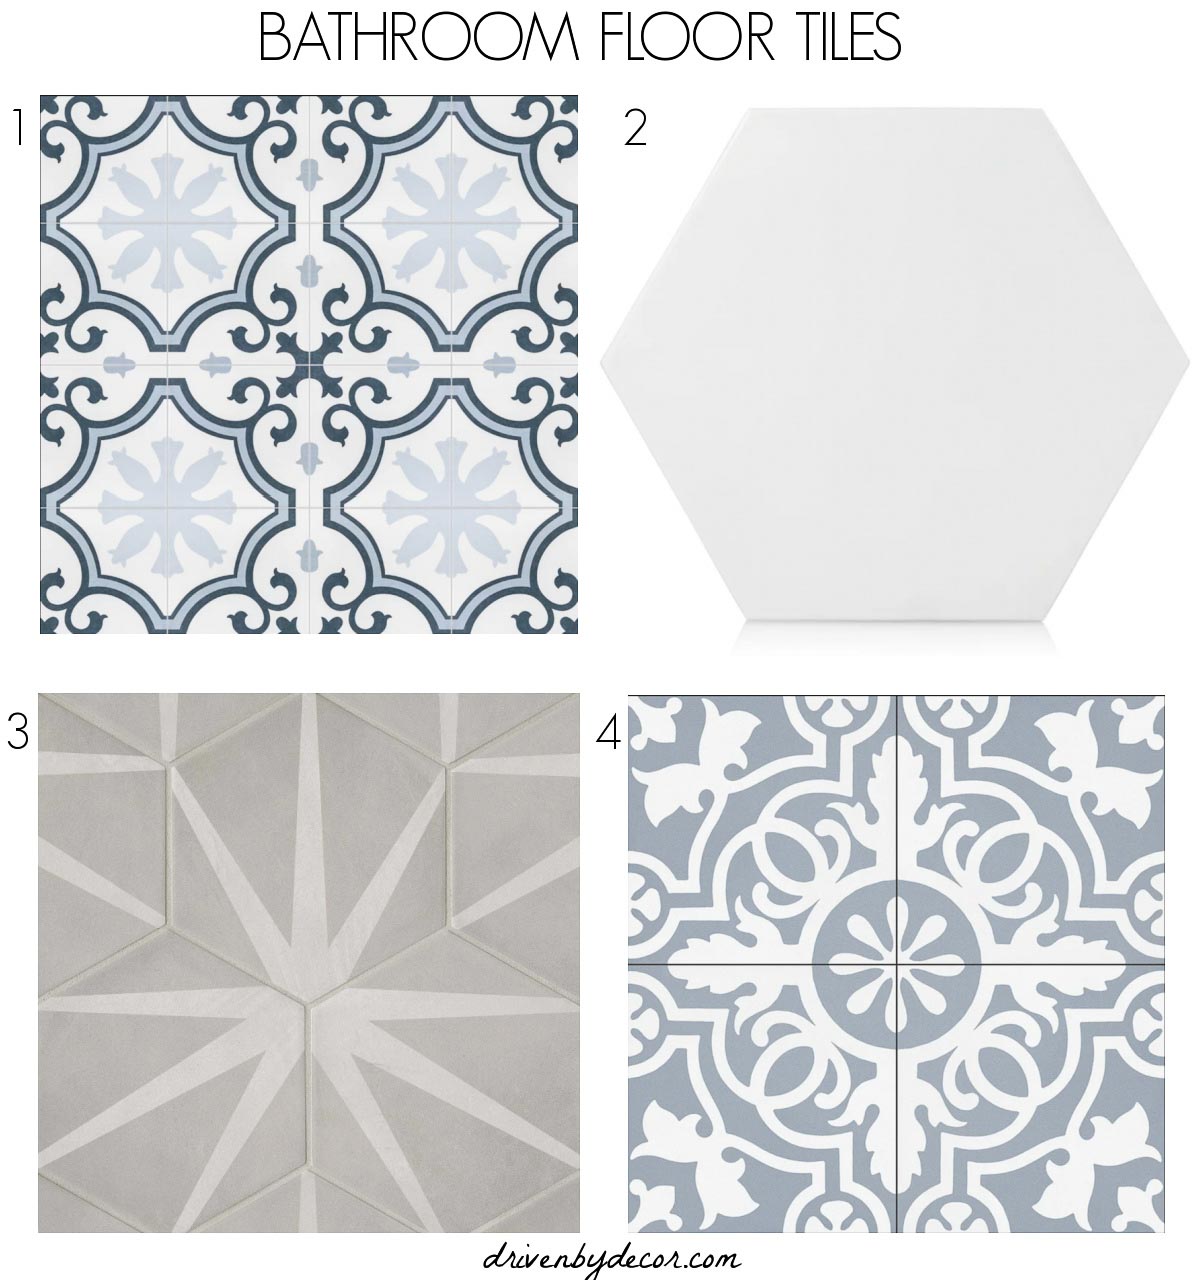 Porcelain tile options for a bathroom floor